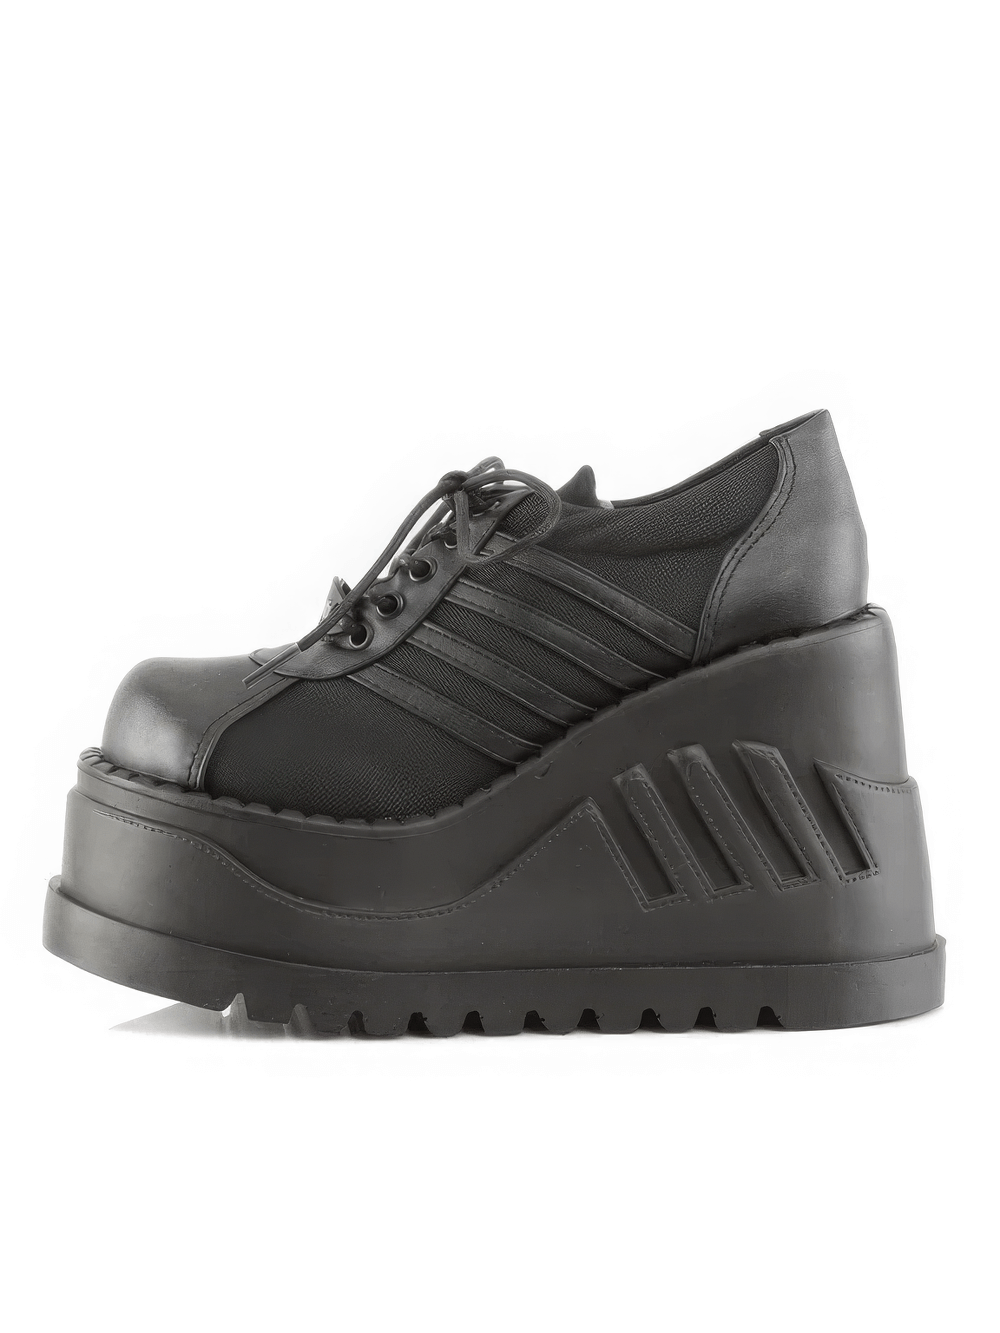 DEMONIA Black Cyber Goth Shoes with Wedge Platform